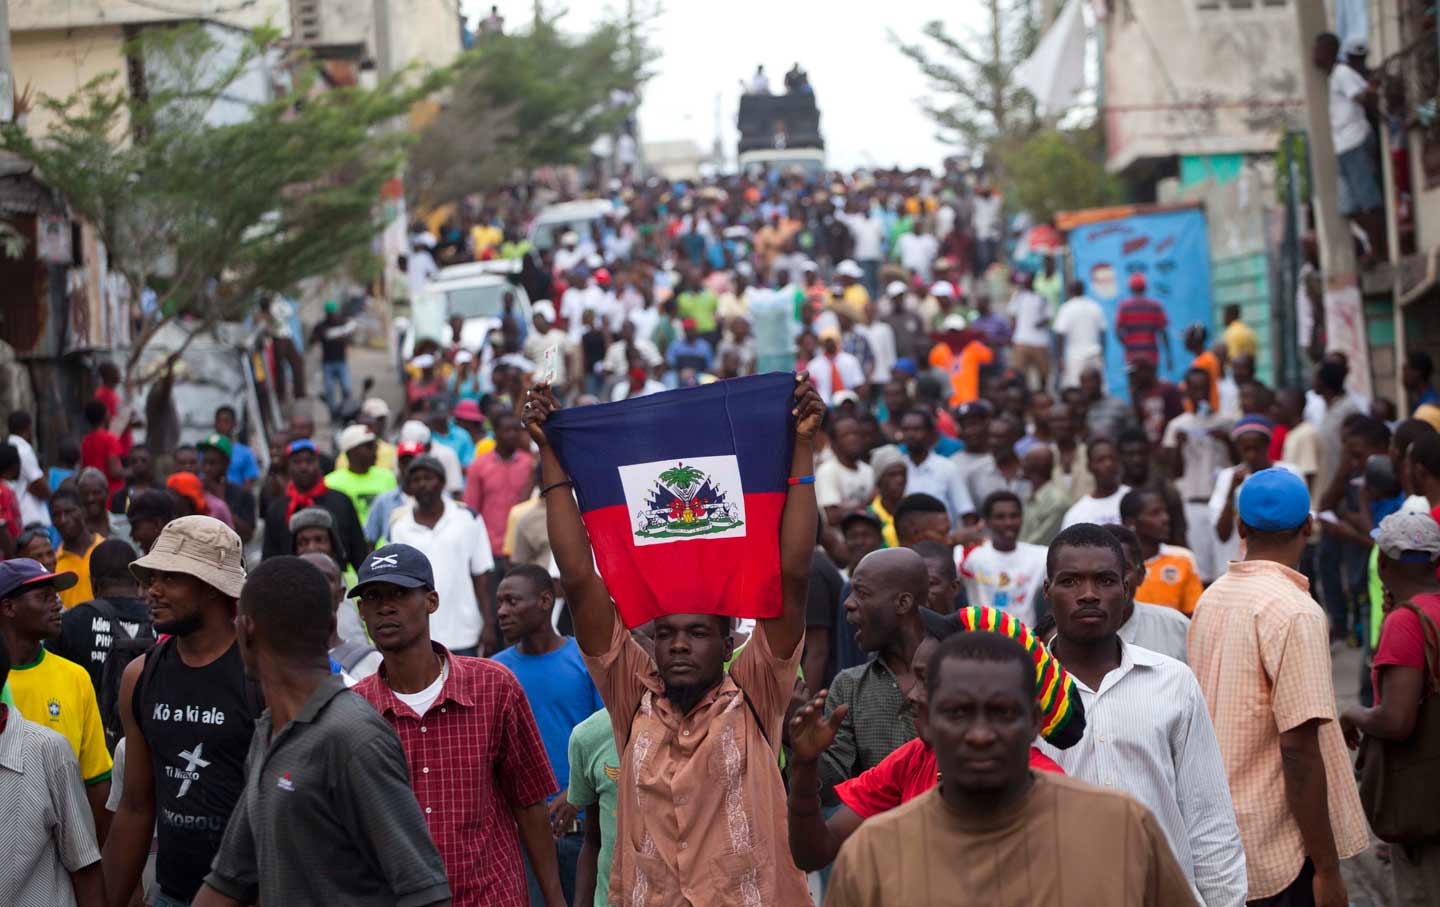 haiti election demonstrators ap img credit The Nation